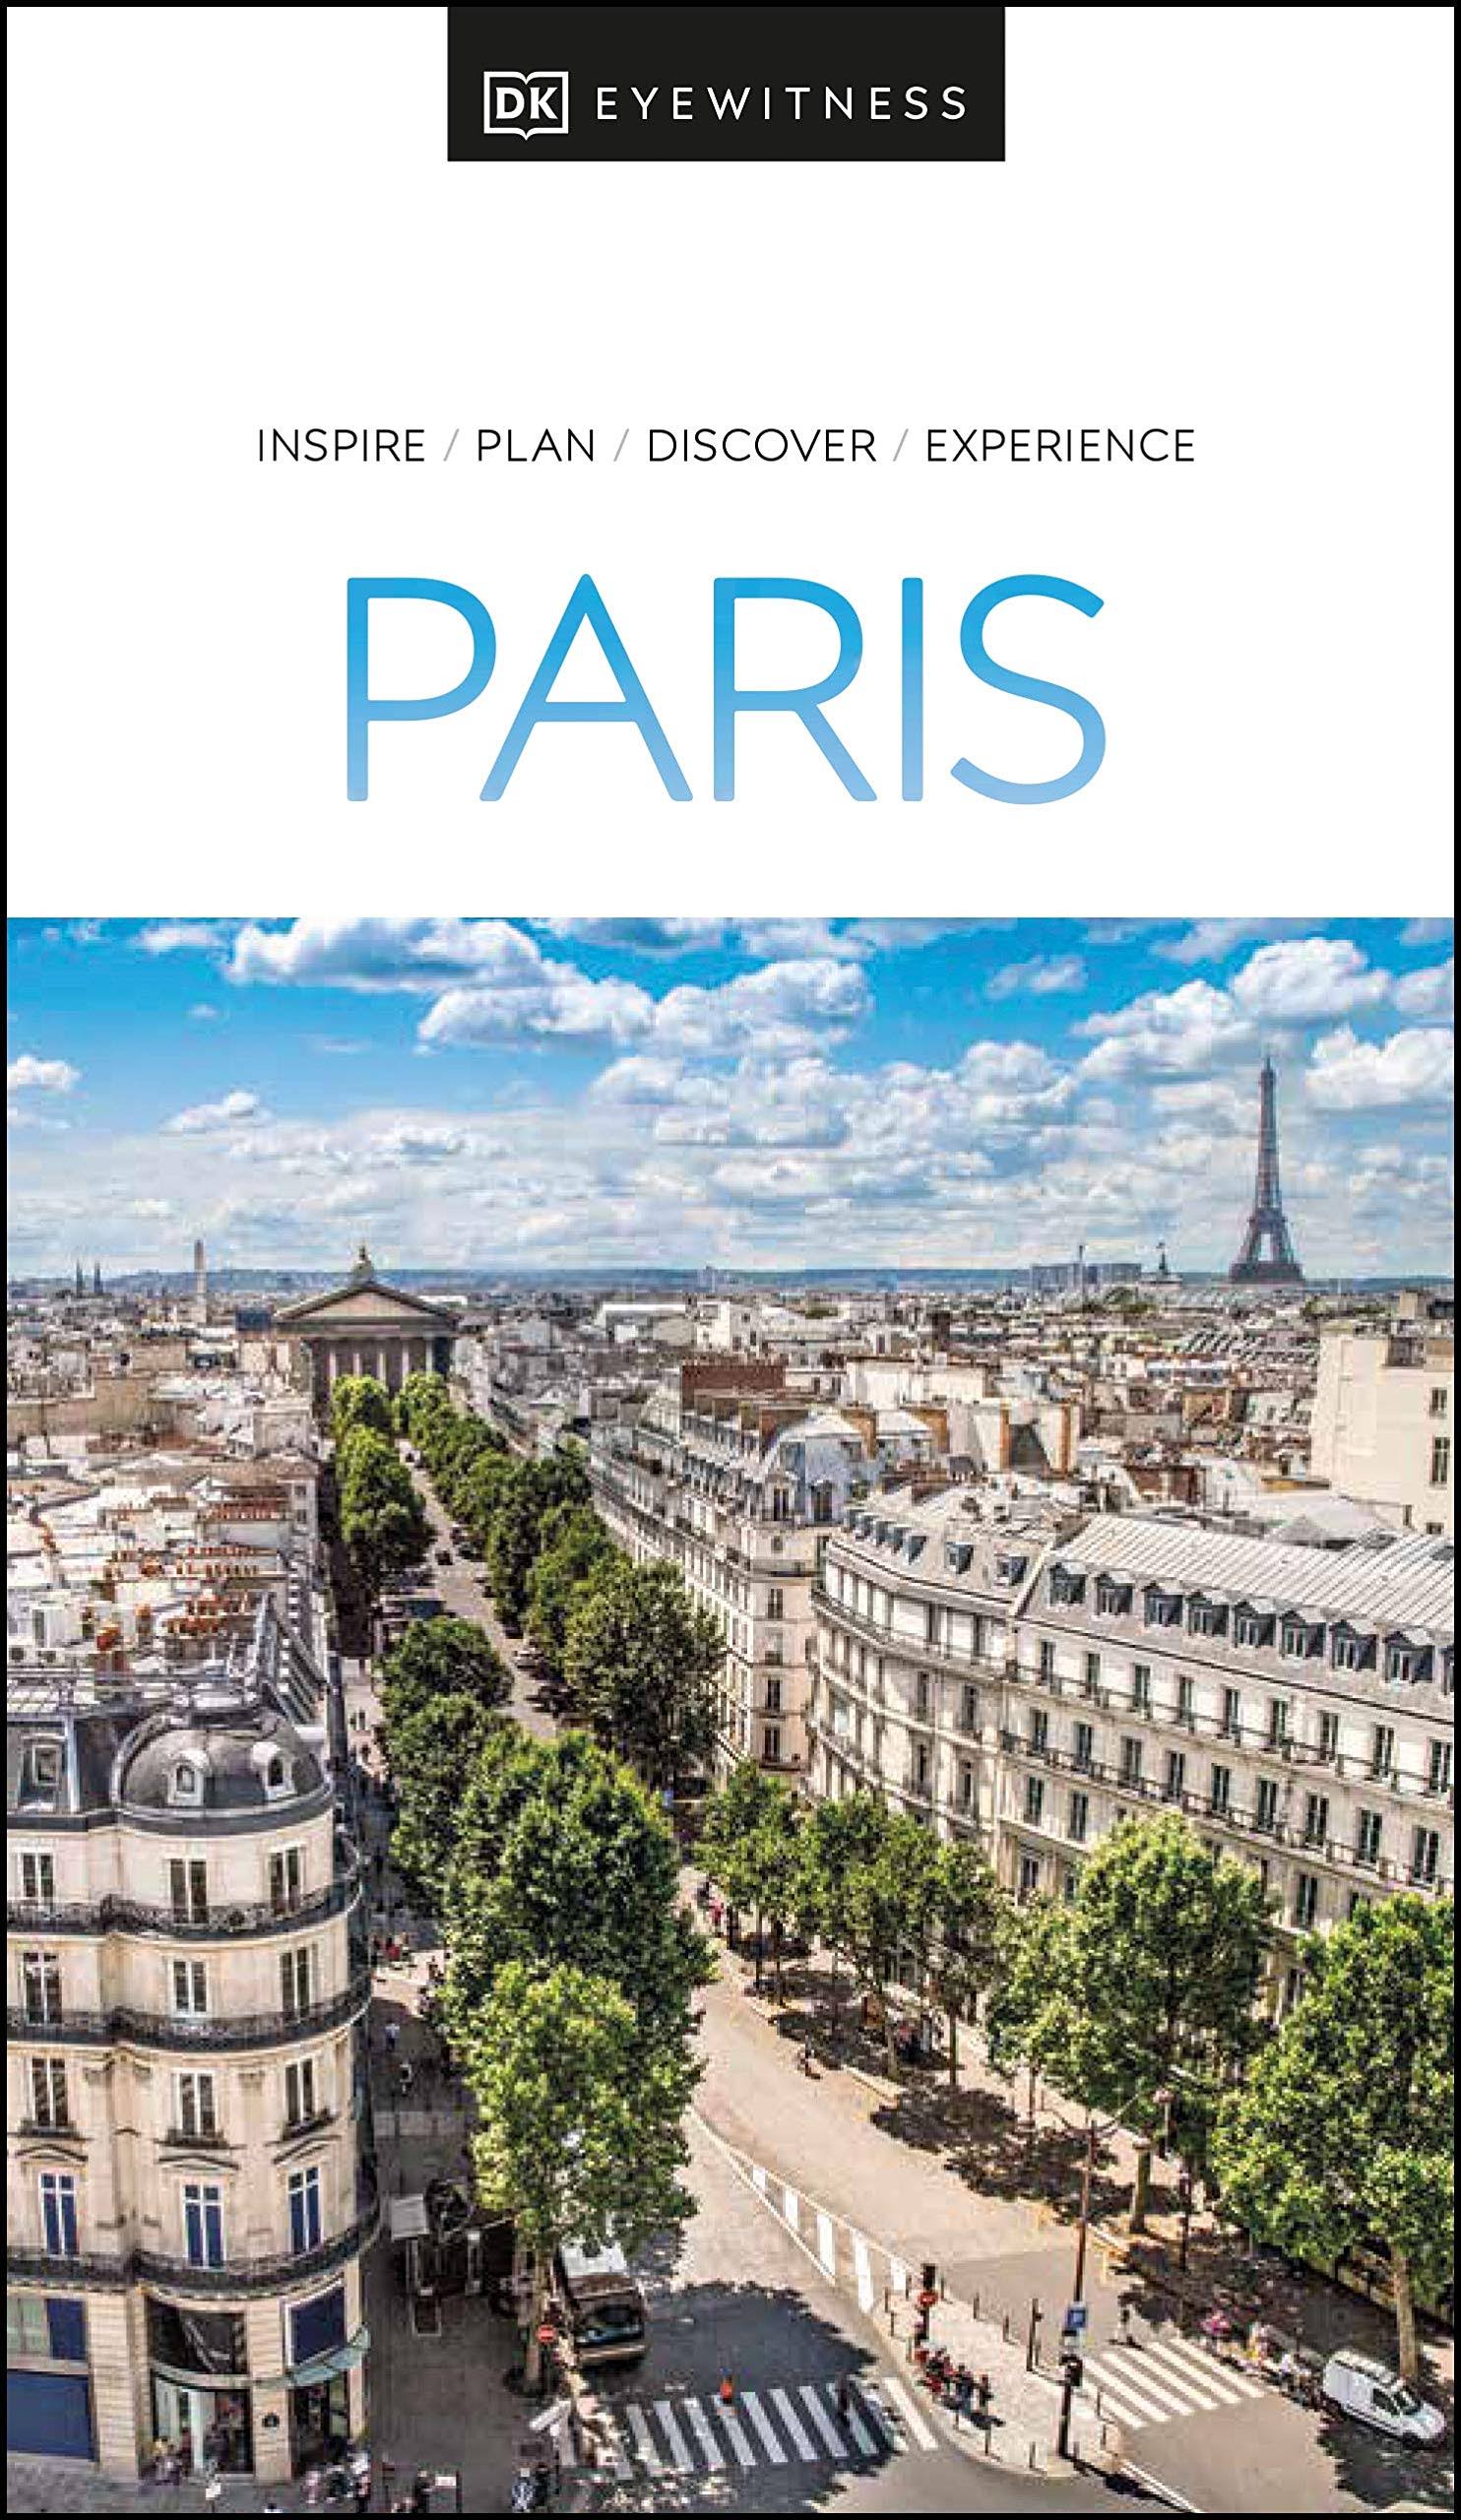 DK Eyewitness Paris [Book]